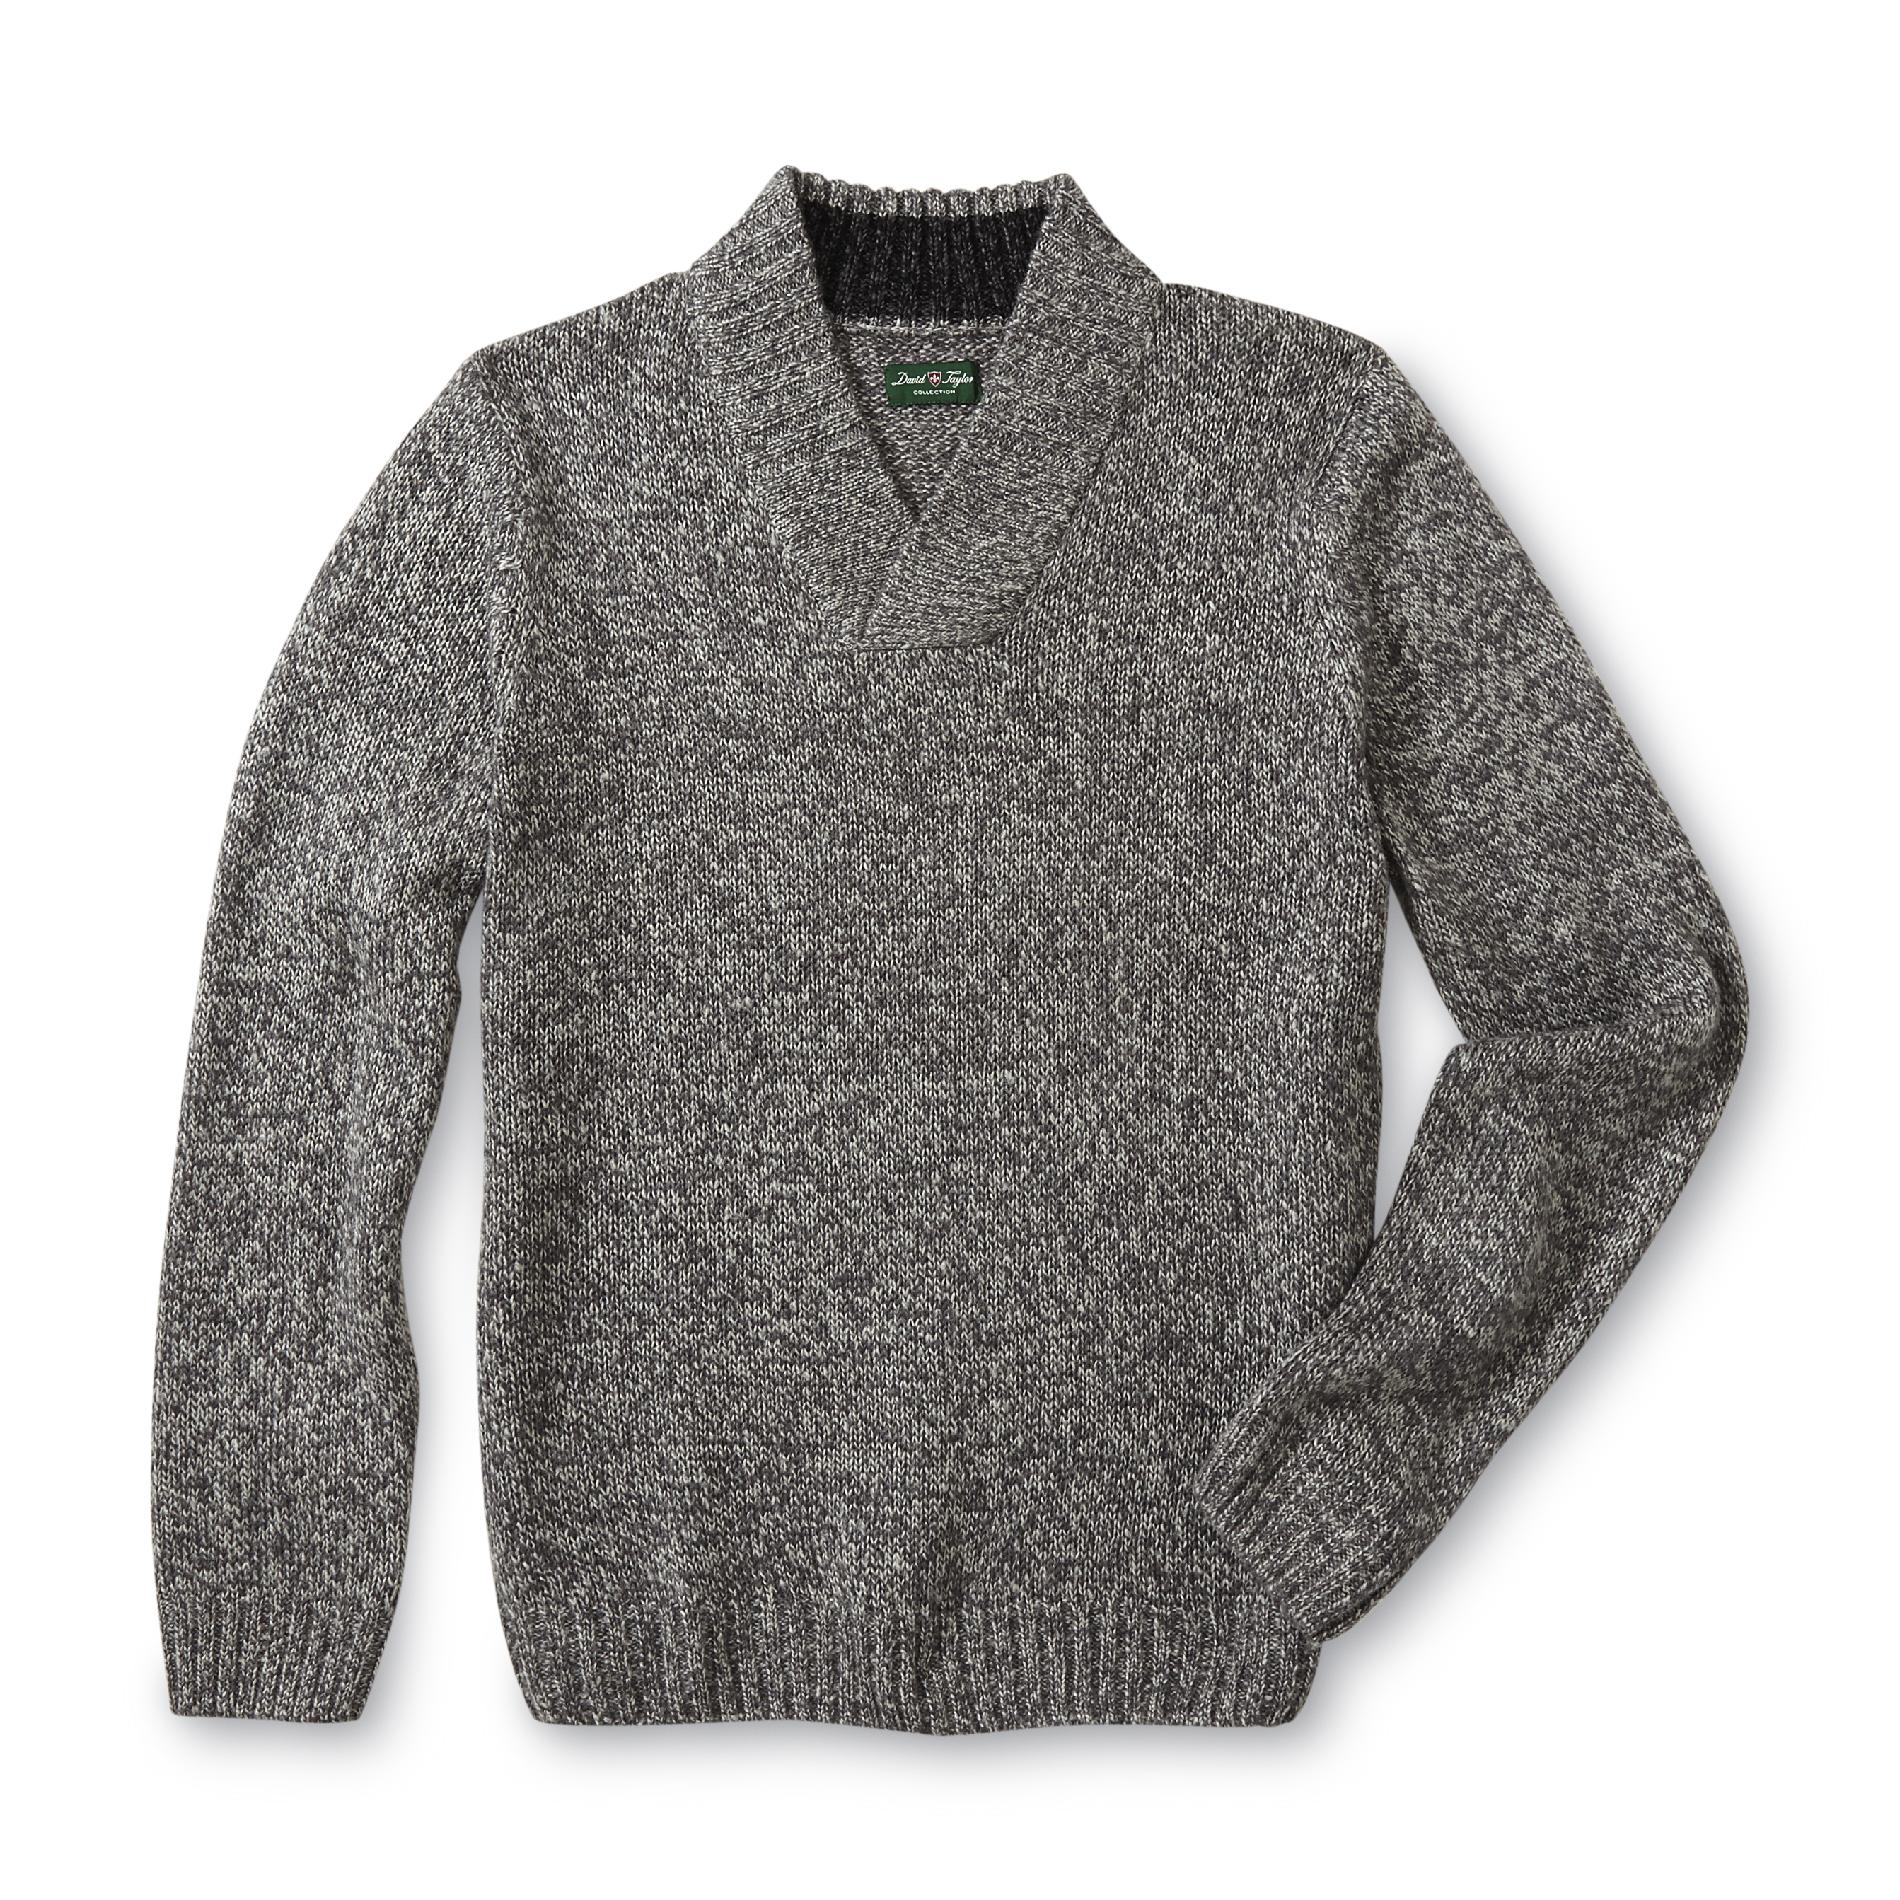 David Taylor Collection Men's Crossover V-Neck Sweater - Marled